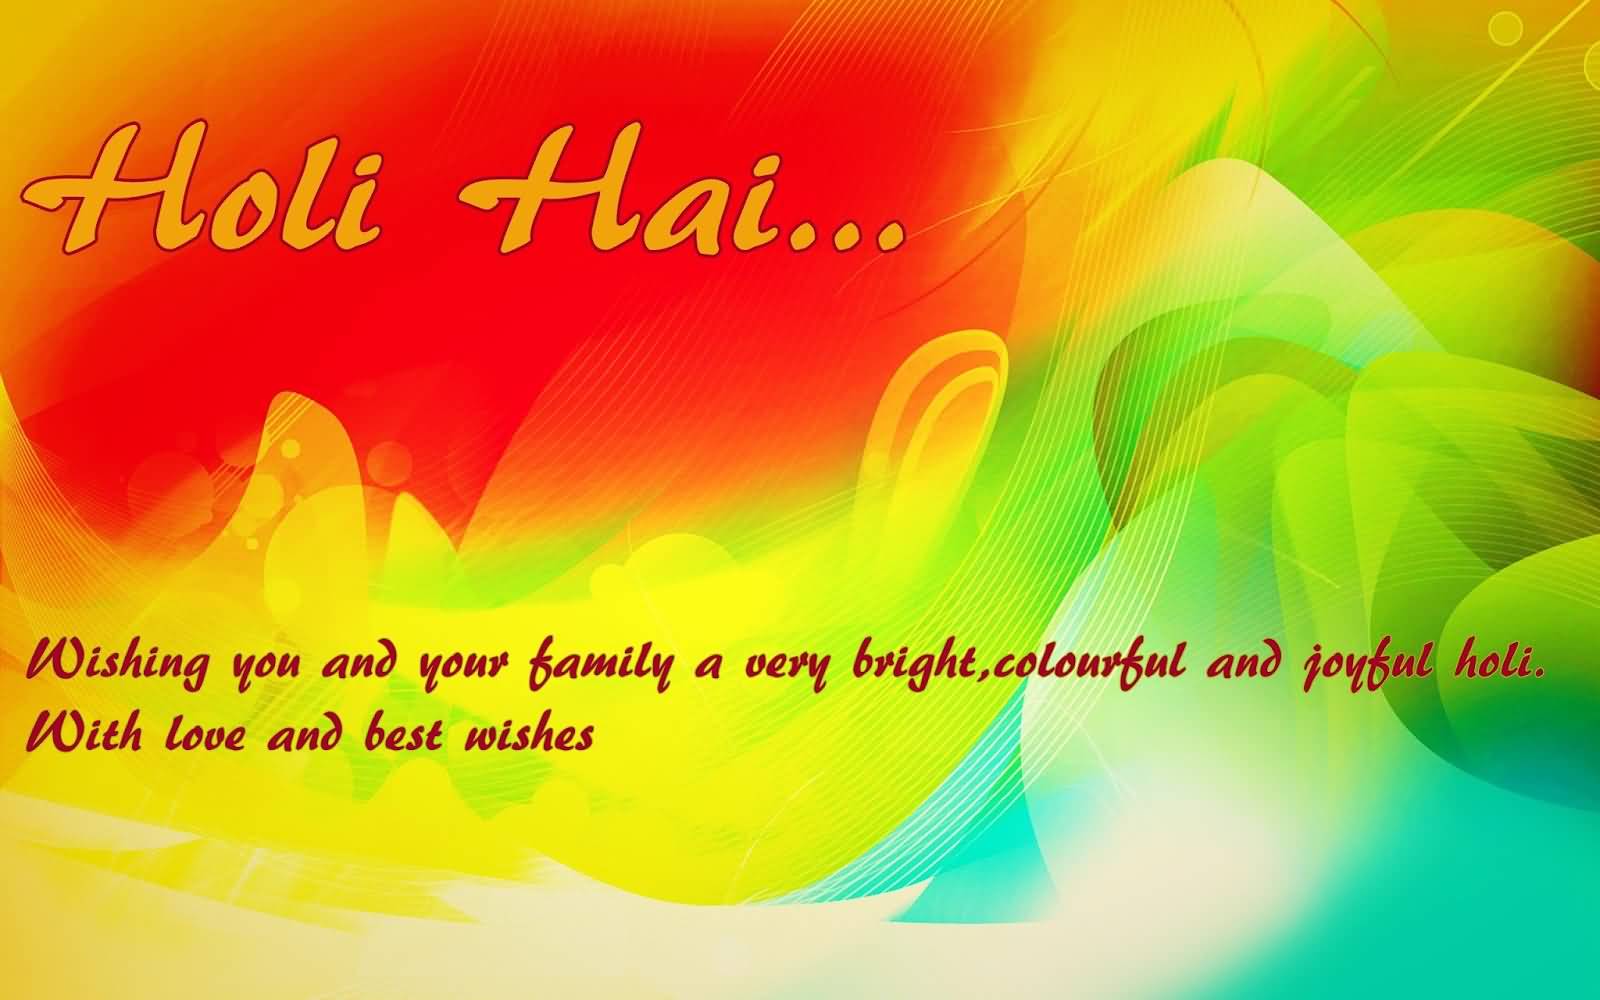 Holi Hai Wishing You And Your Family A Very Bright, Colorful And Joyful Holi. Card